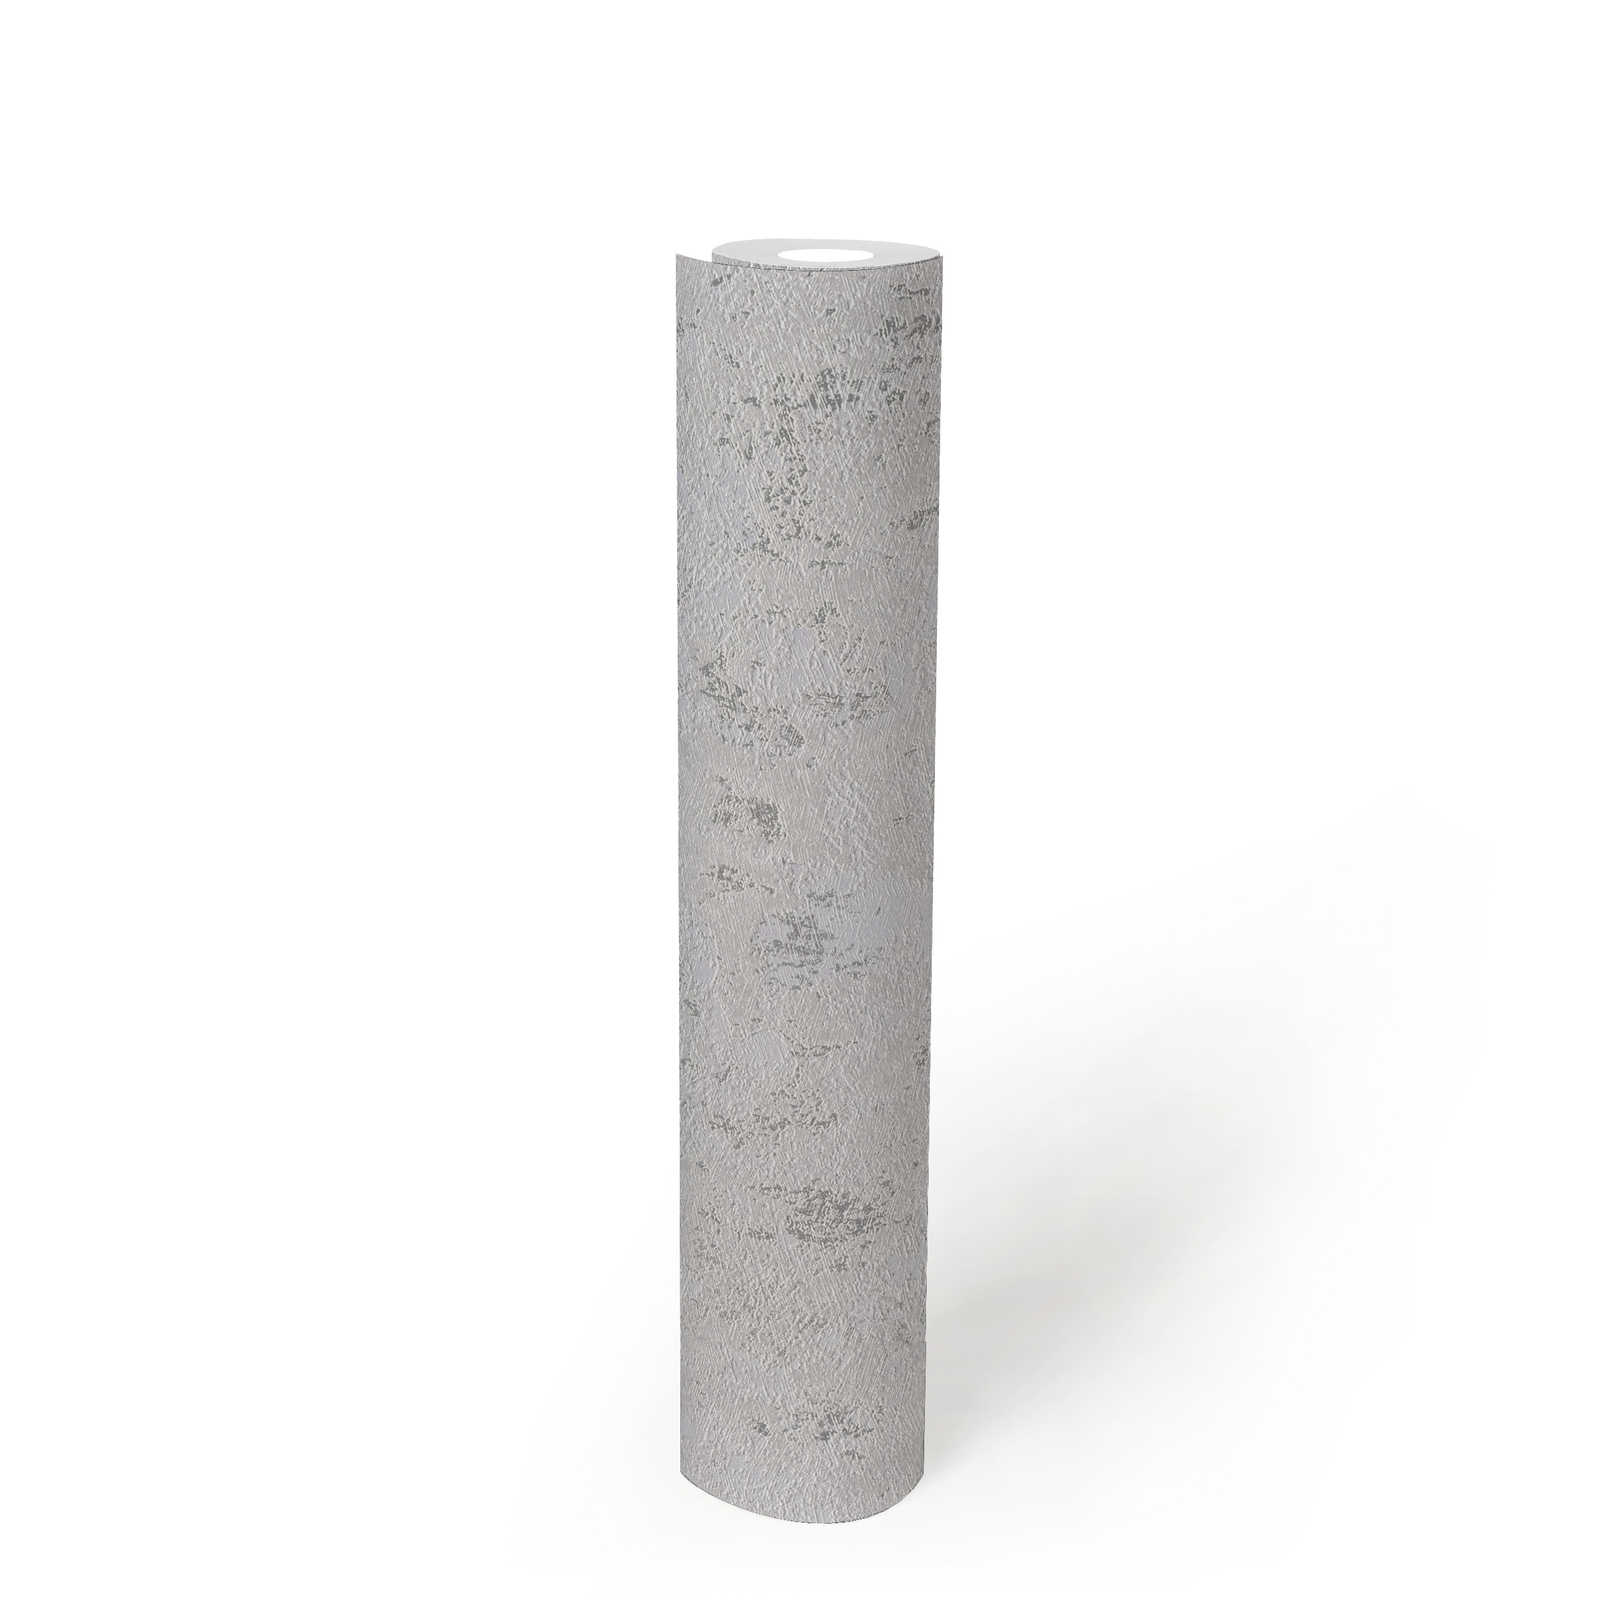             Tapete in grober Putzoptik mit Akzenten – Grau, Silber, Metallic
        